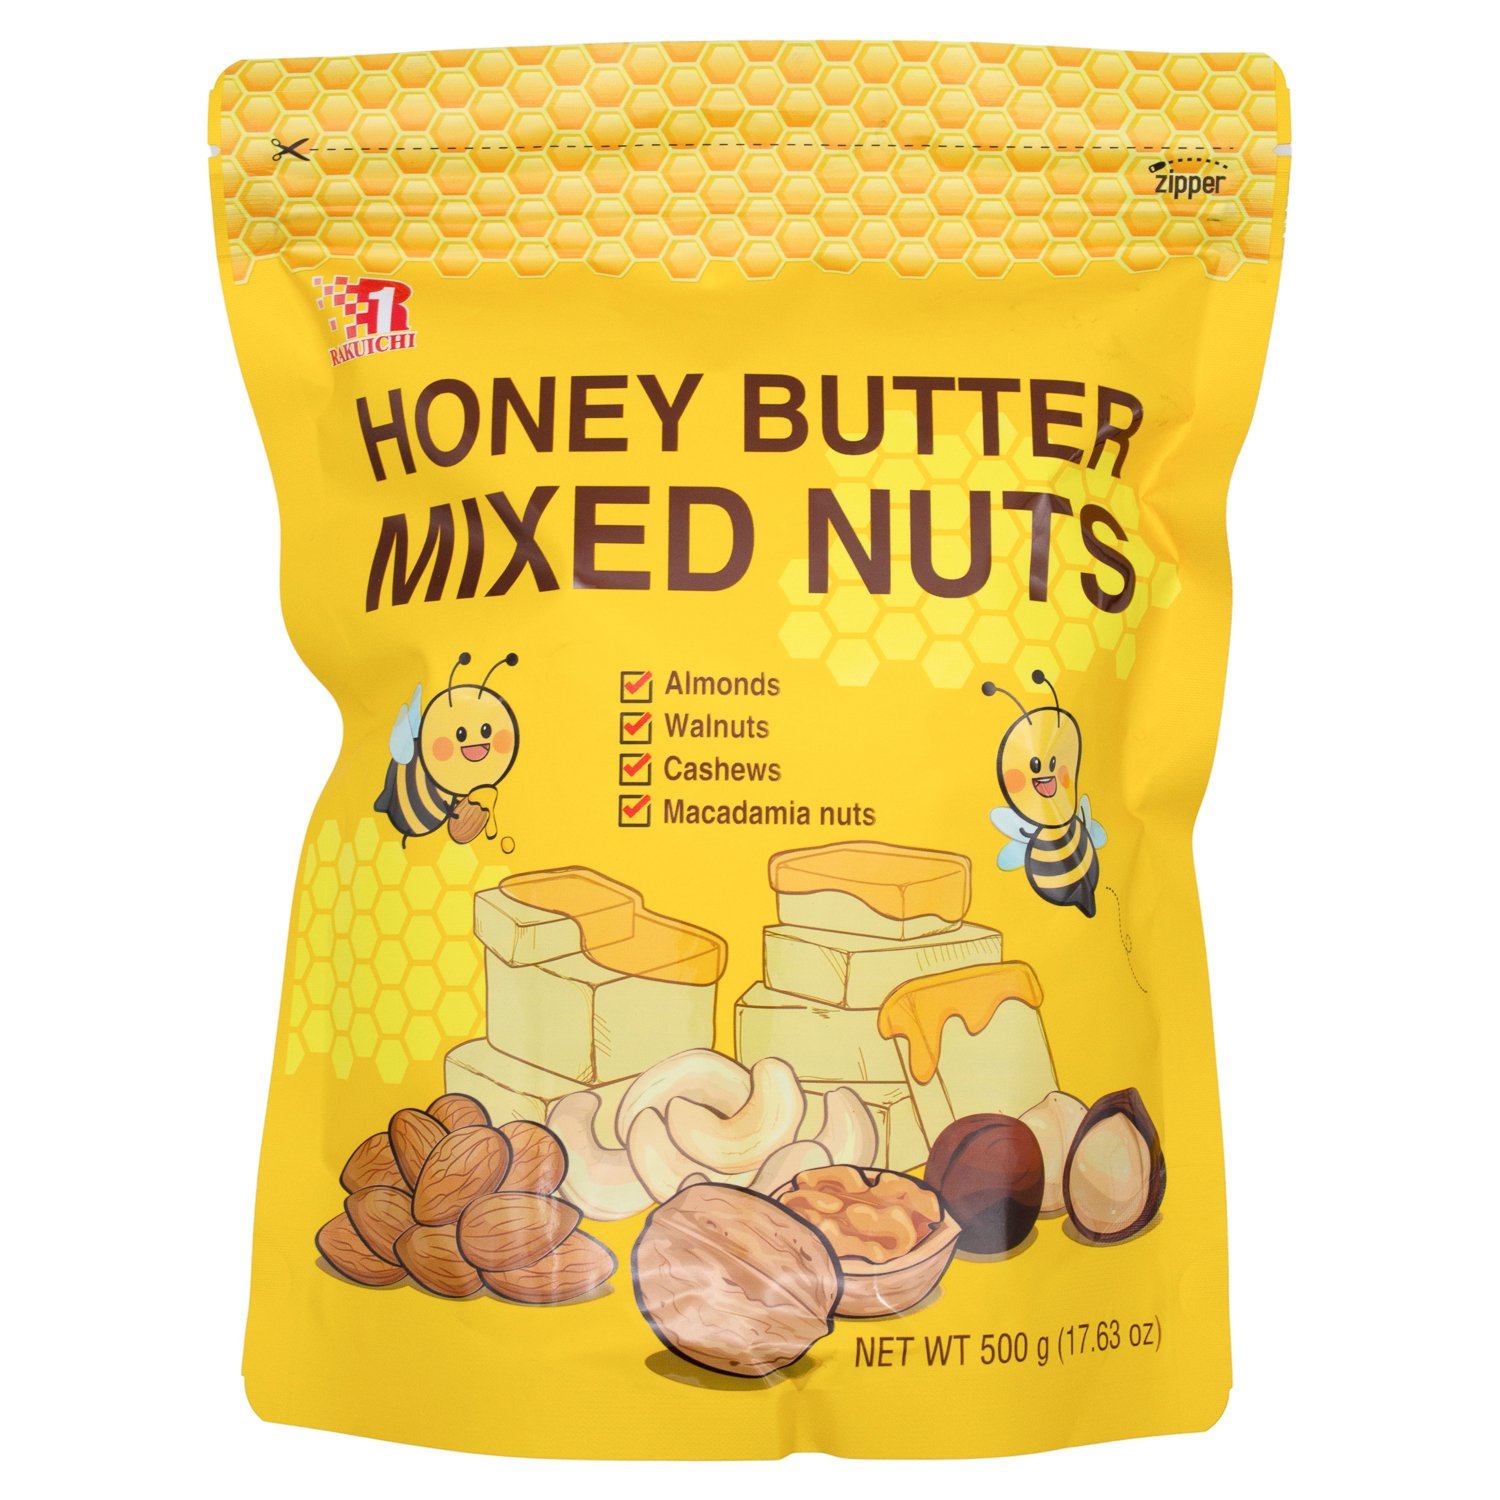 2 Pack | Savanna Honey Roasted Mix Nuts, 30 oz